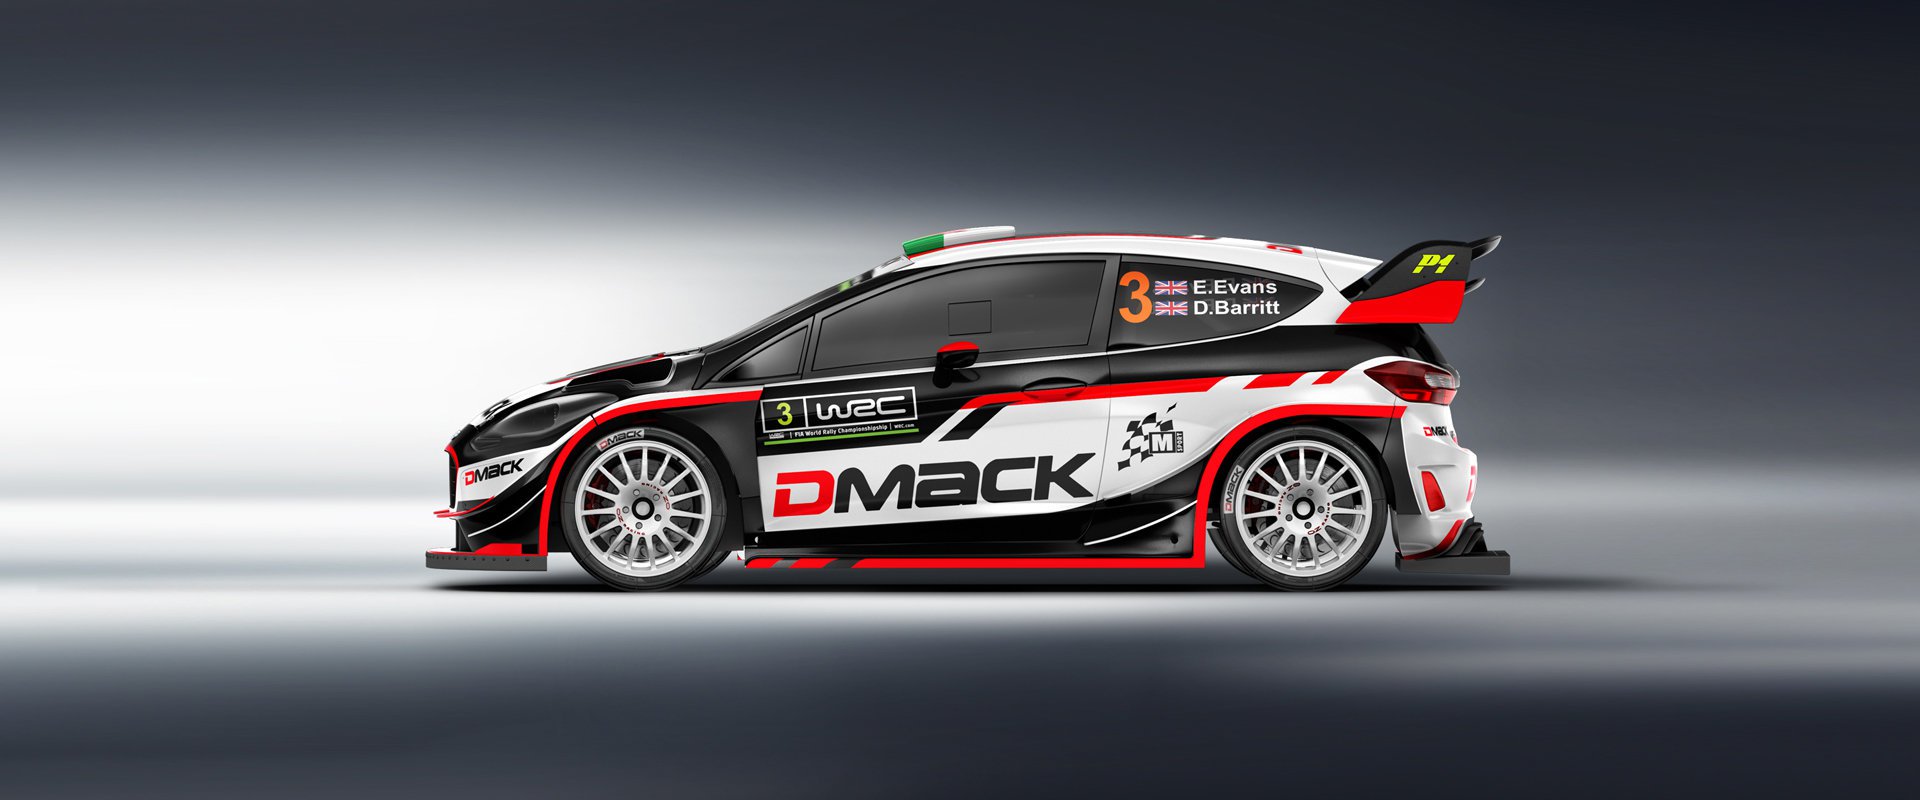 DMACK World Rally Team #3